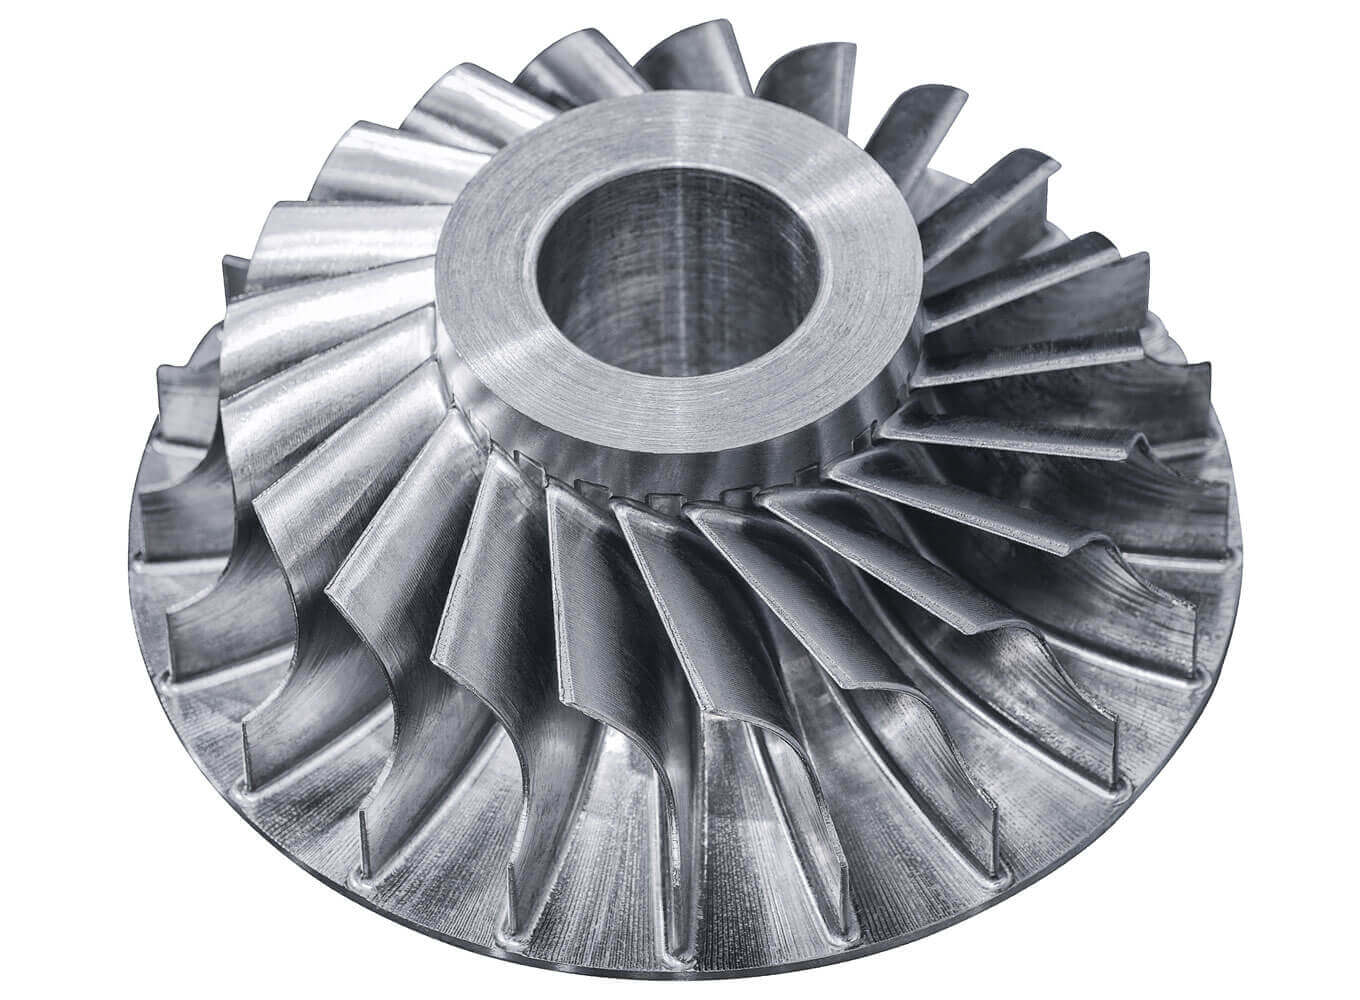 aeropower-turbine-1360x1000-1